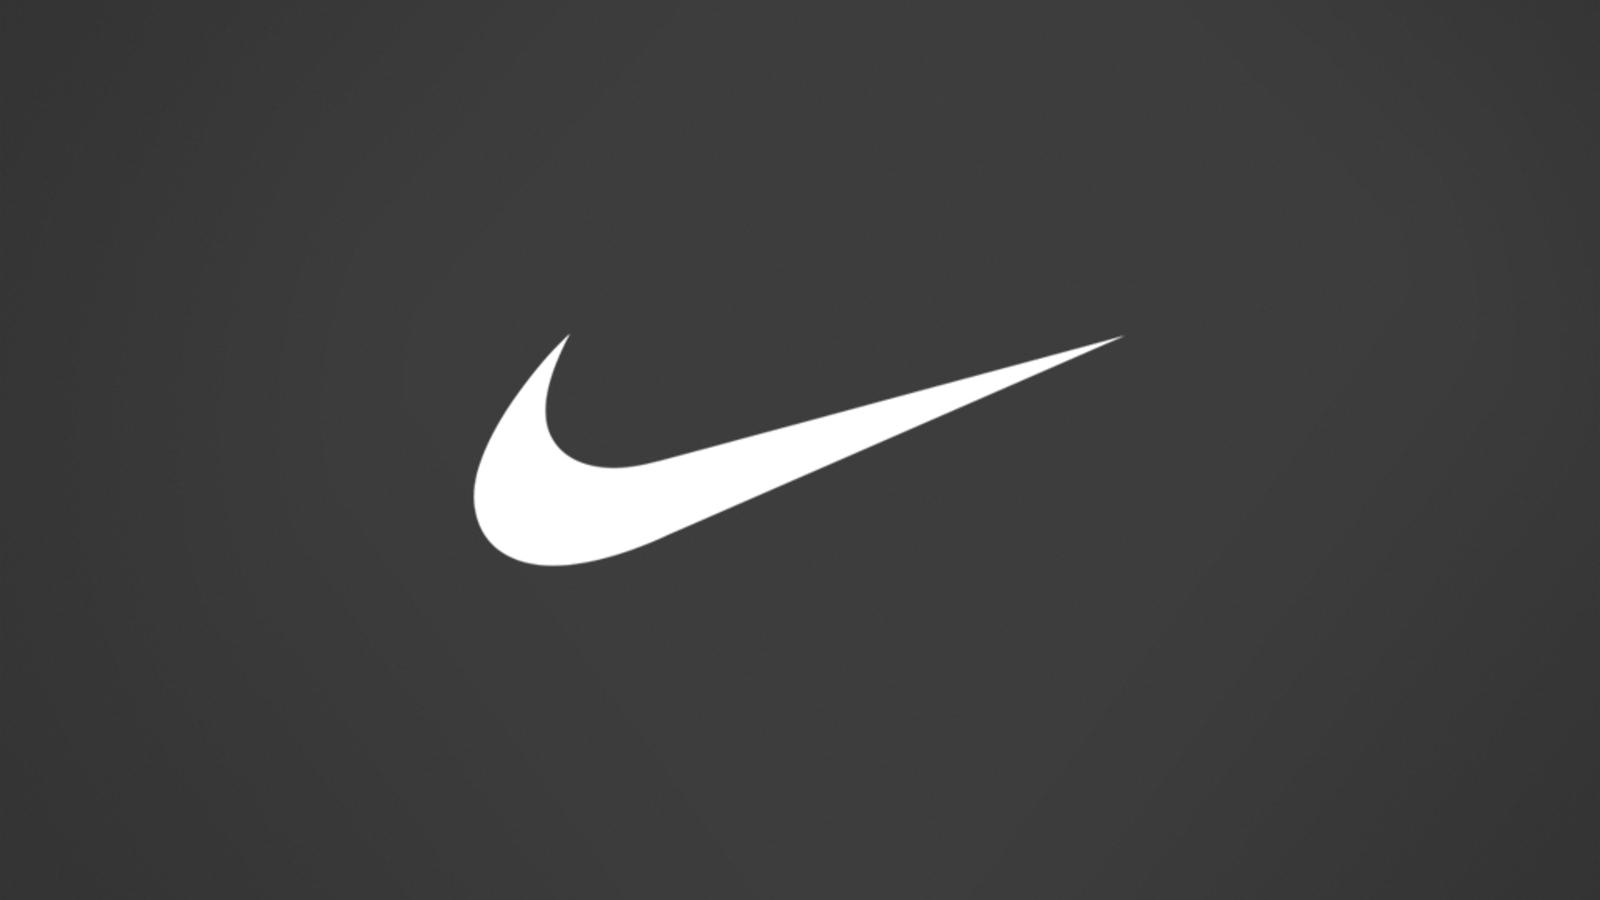 White Nike Logo - NIKE, Inc. Announces Category Leadership Changes - Nike News